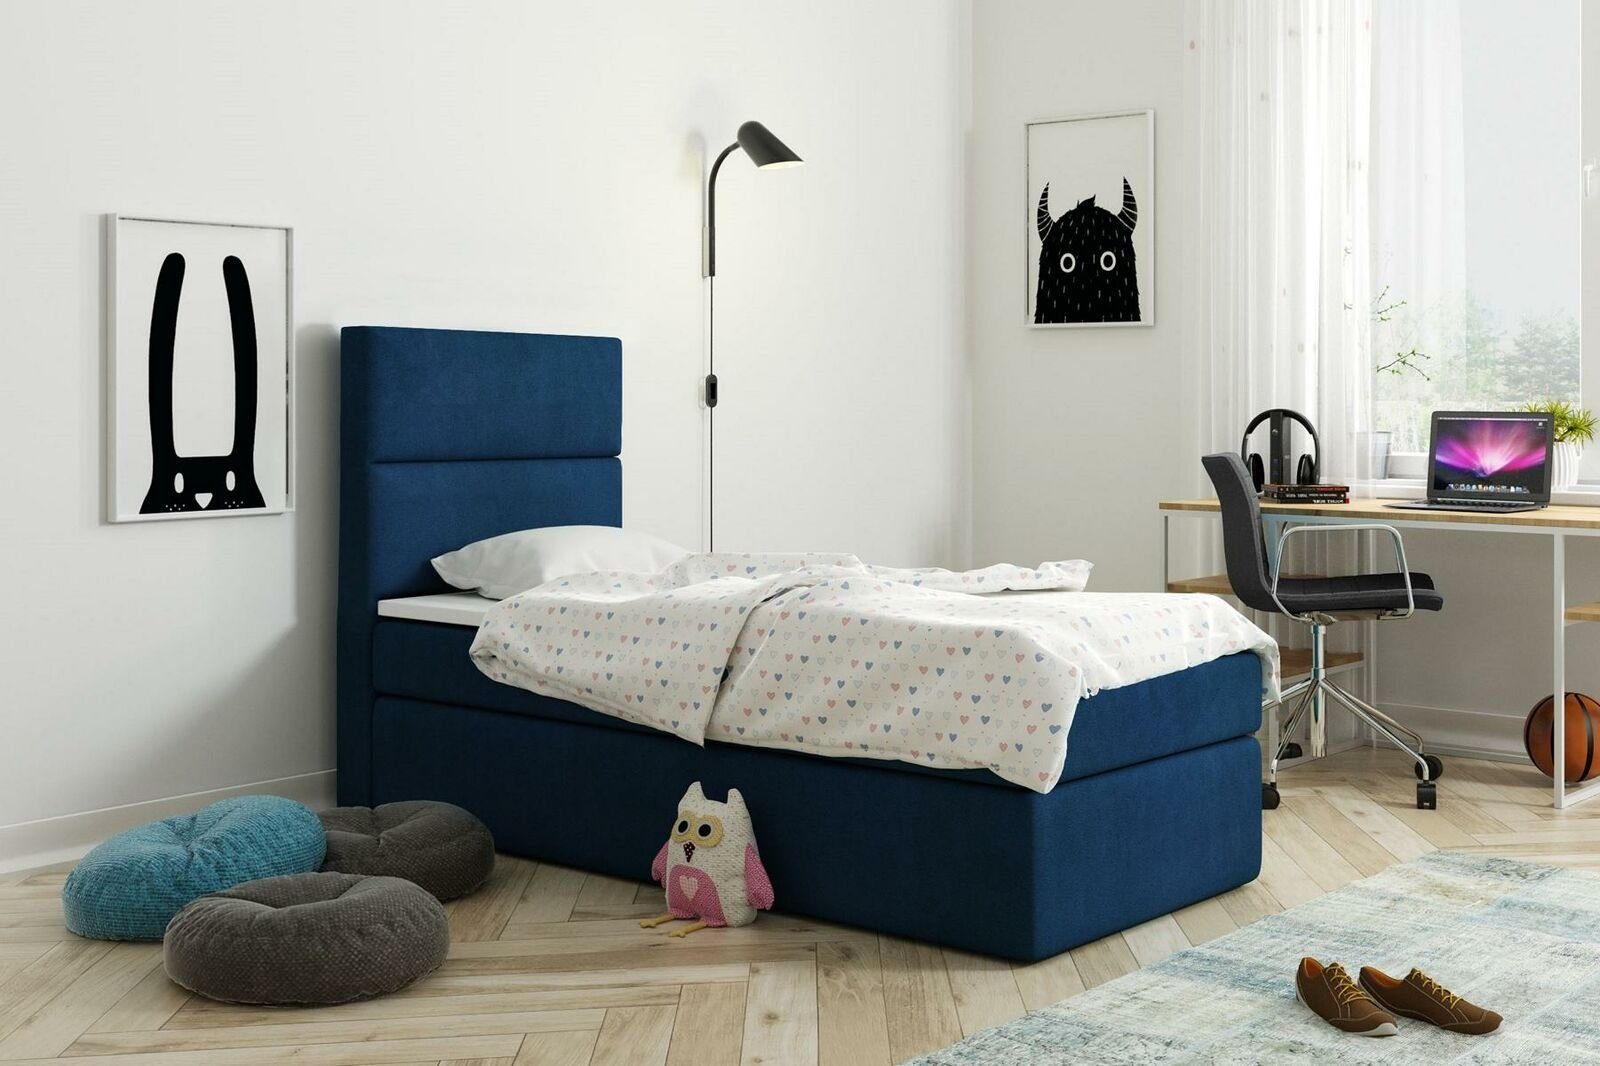 Big Design Bett Hotel Made Ehe Luxus in Boxspring Bett), das Bett Polster Blau JVmoebel Europe Bett (Nur Bett